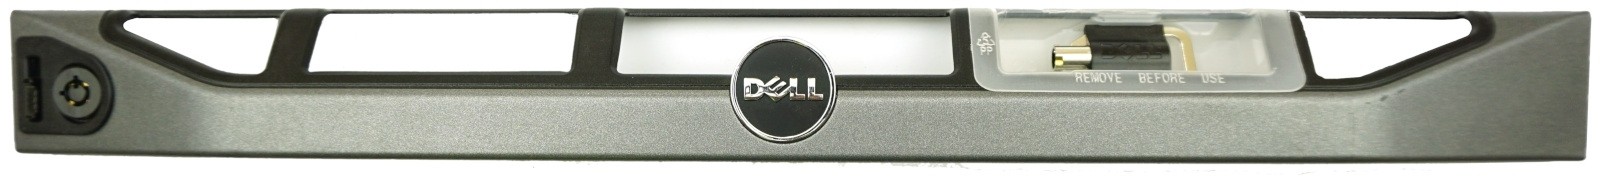 Dell PowerEdge R320, R420, R430, R620, R630 Front Bezel No Dell Logo